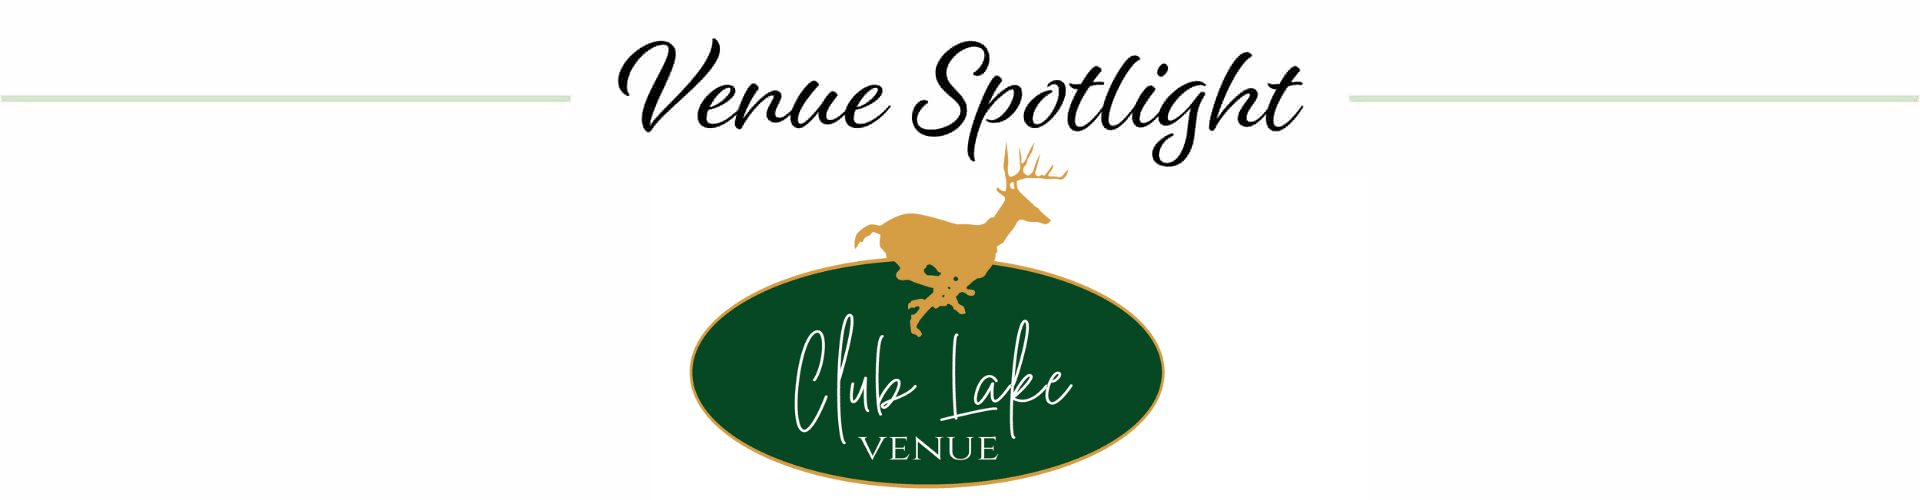 club lake venue spotlight new logo